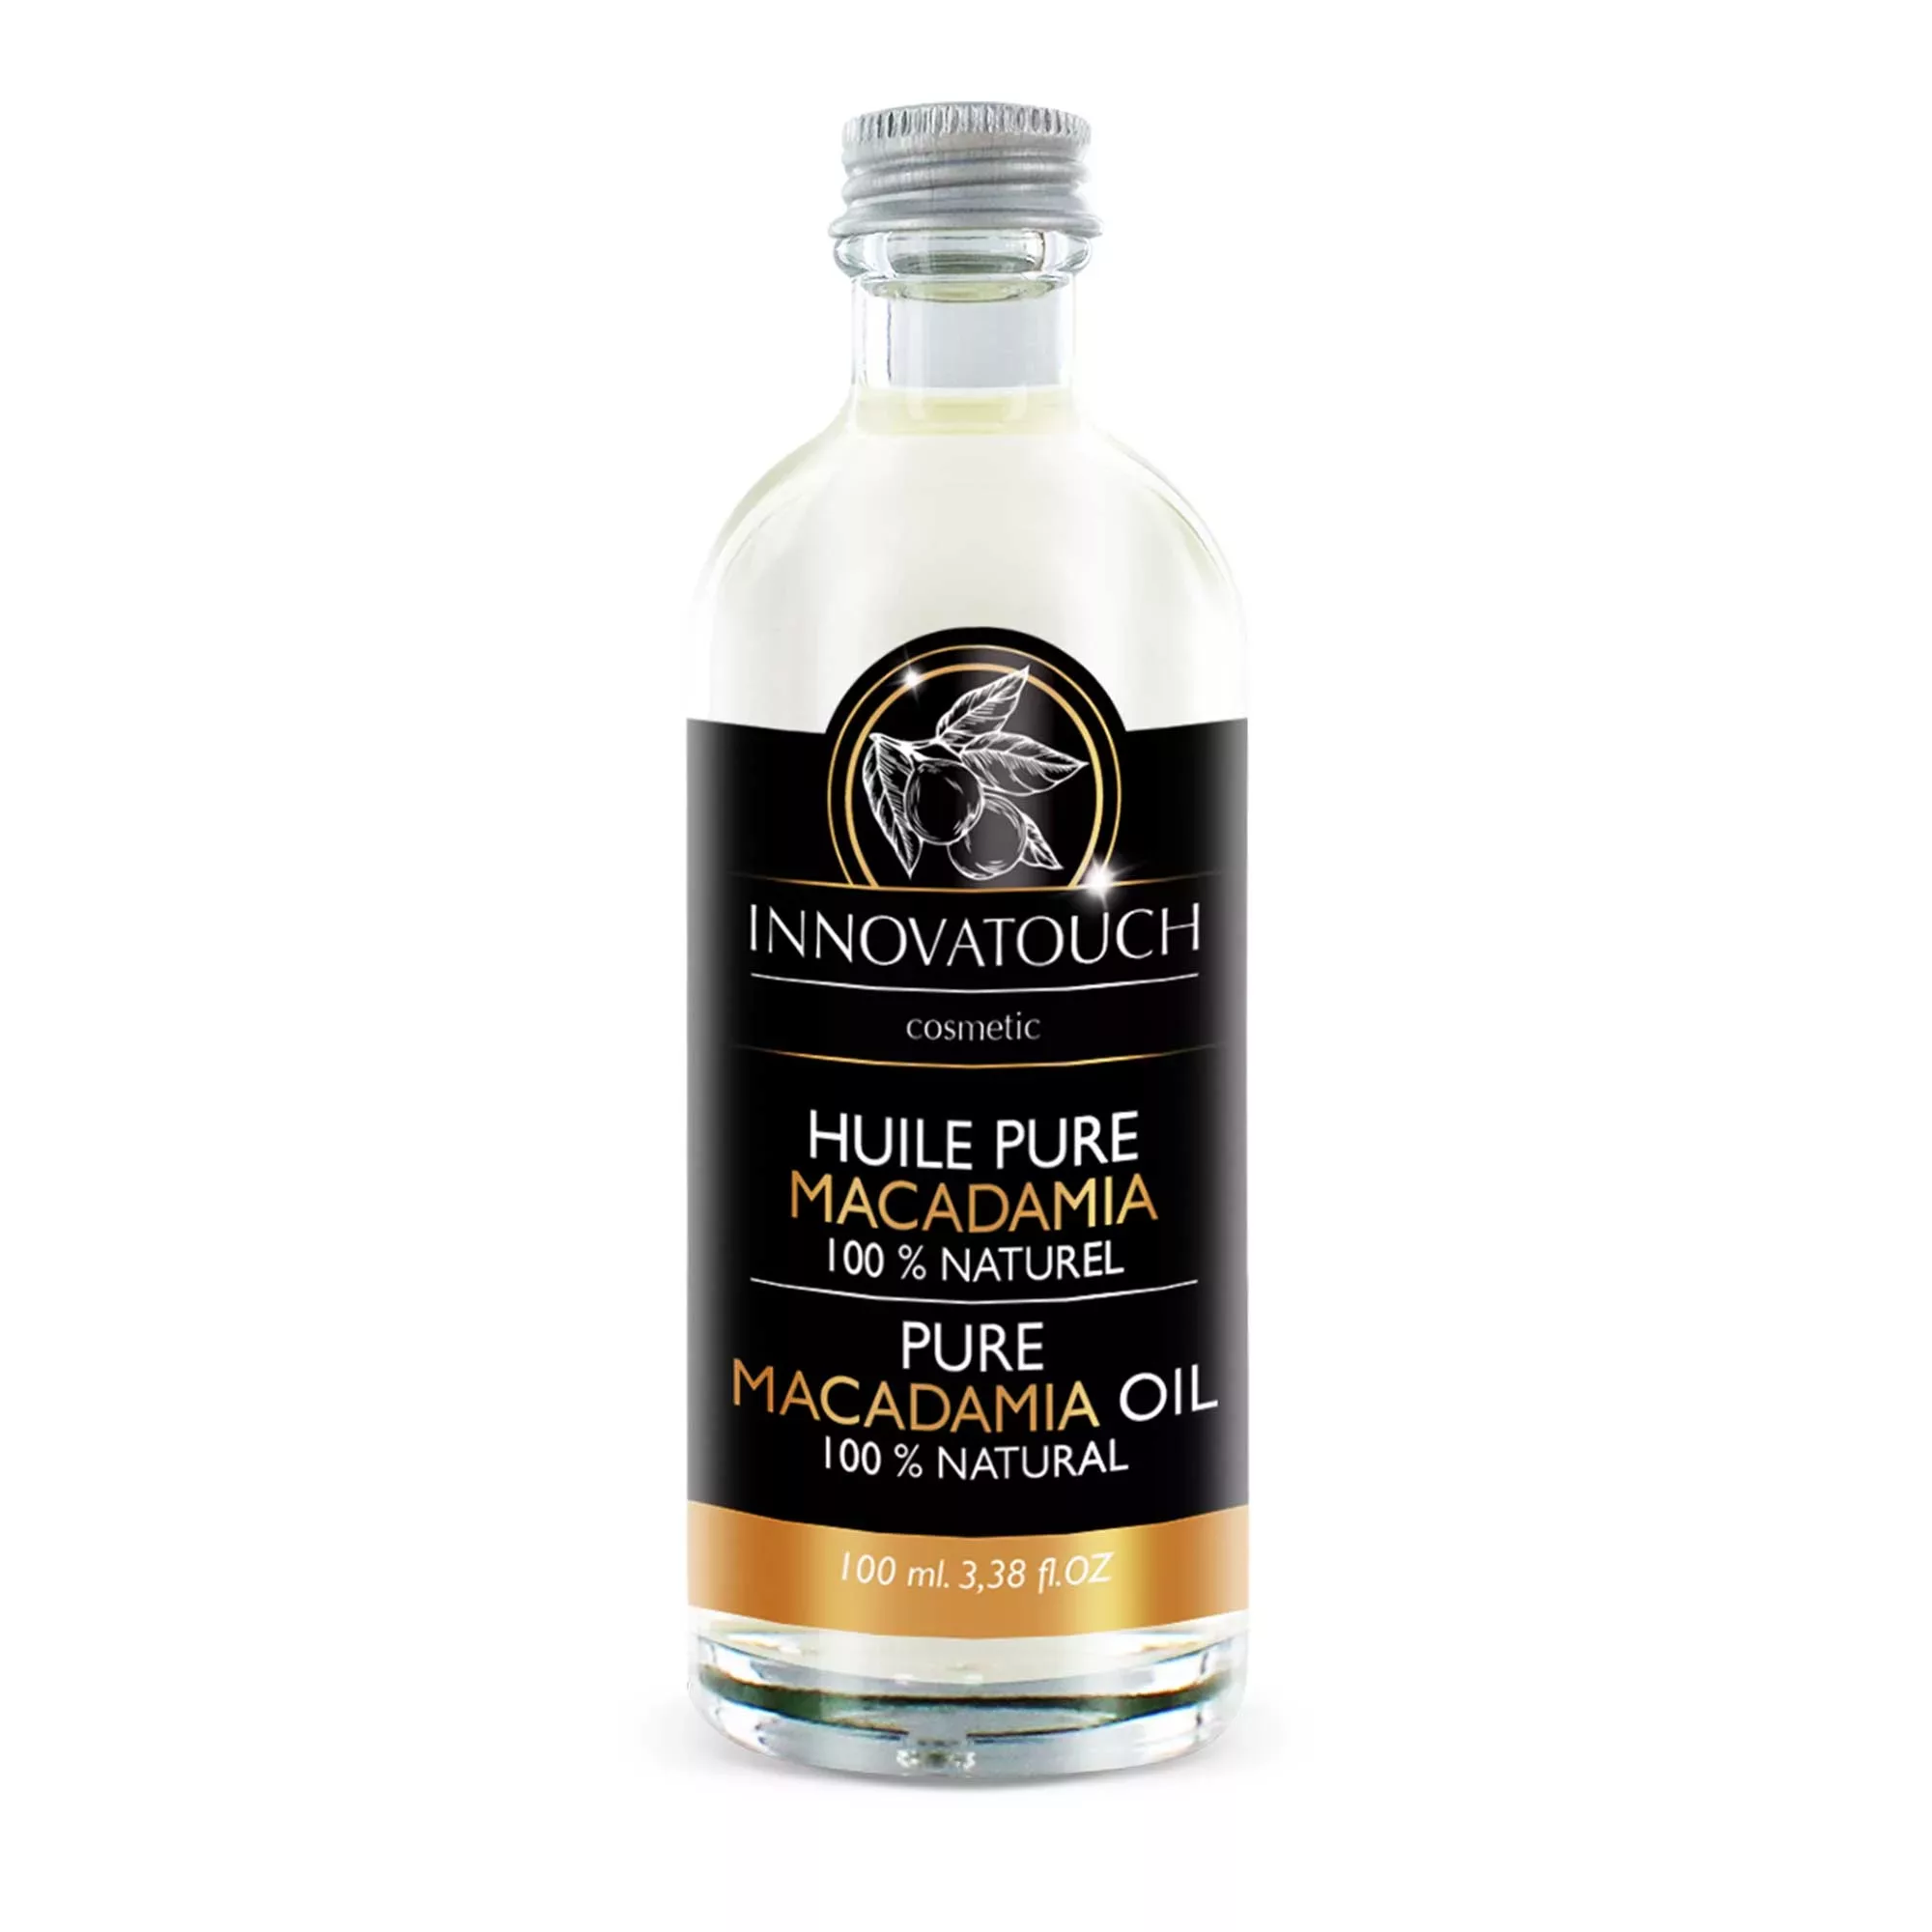 Huile Pure de Macadamia Innovatouch Cosmetic 100% naturelle au format 100ml